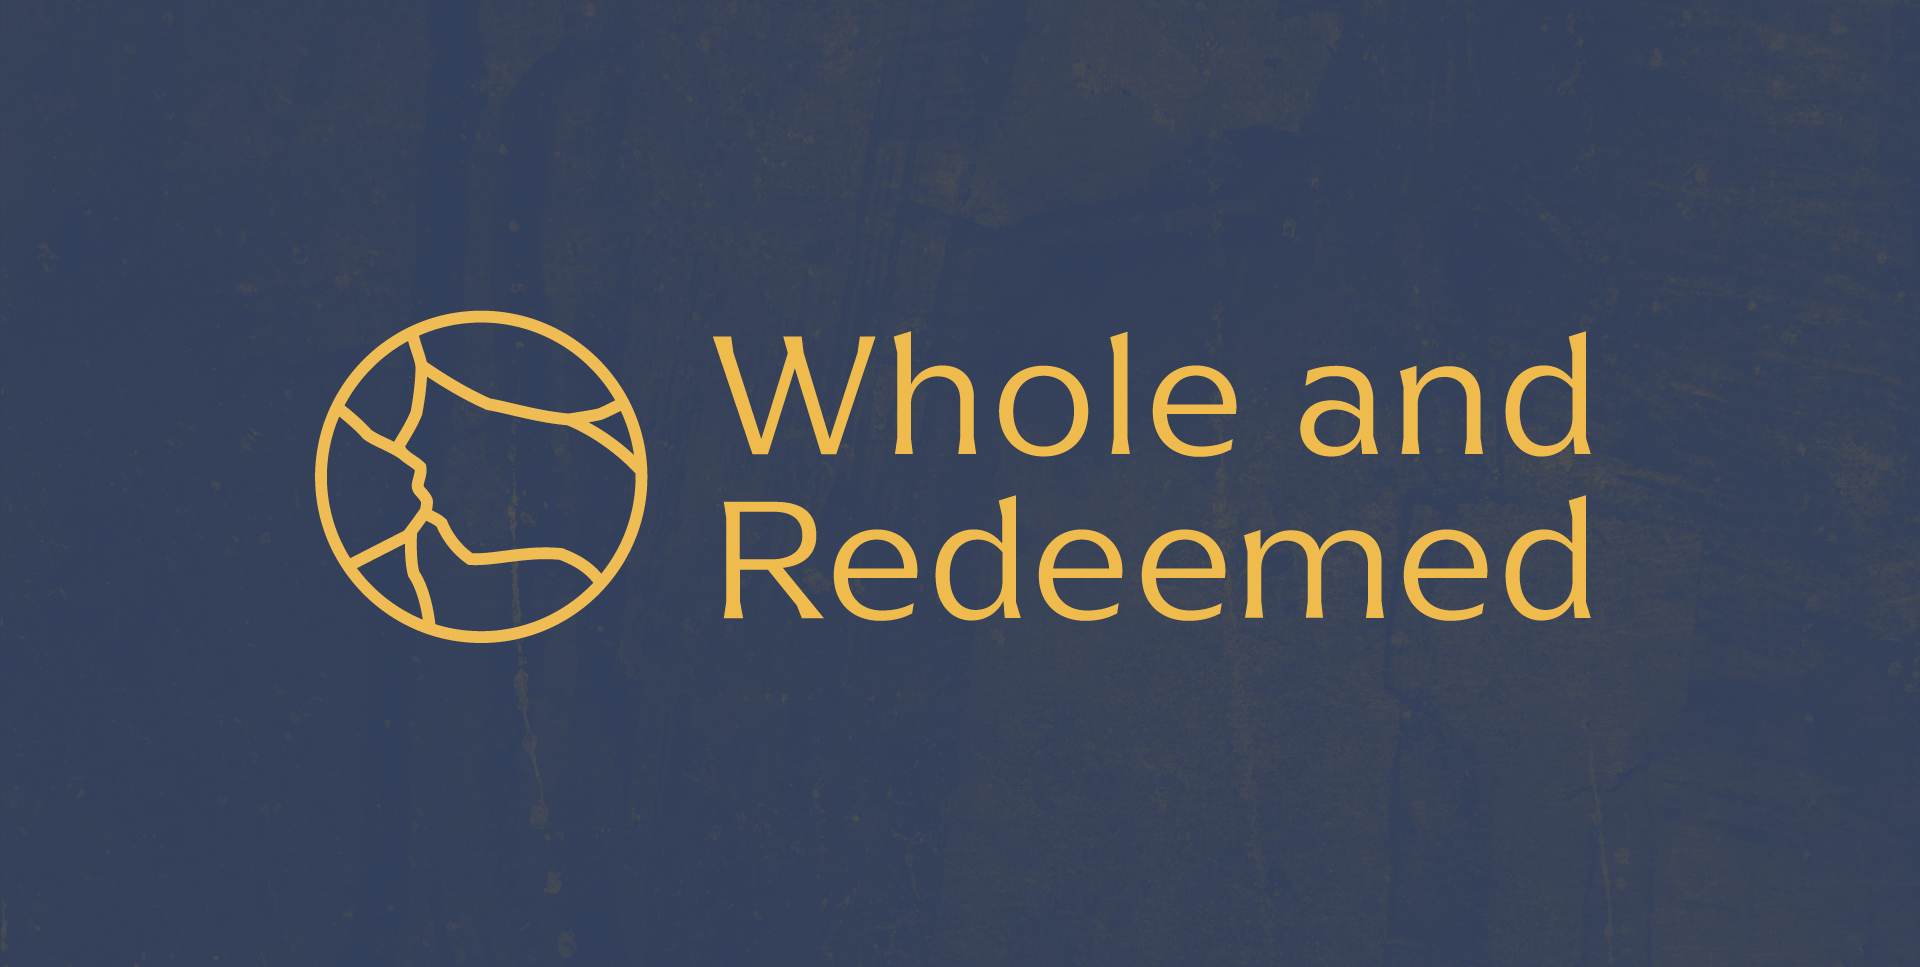 redeemed logo